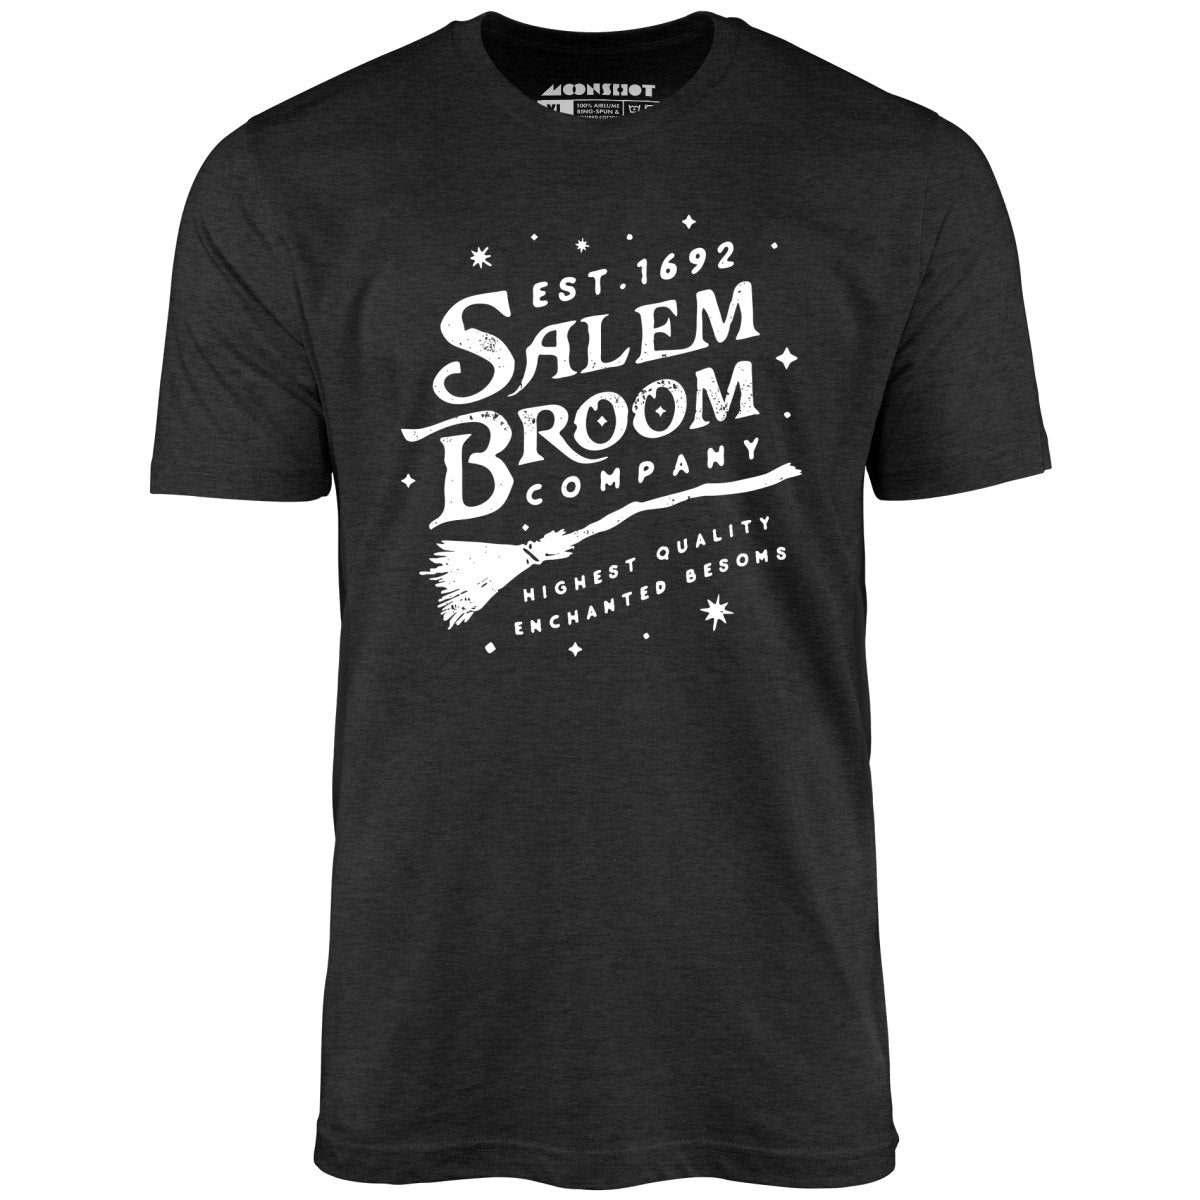 Salem Broom Company - Unisex T-Shirt